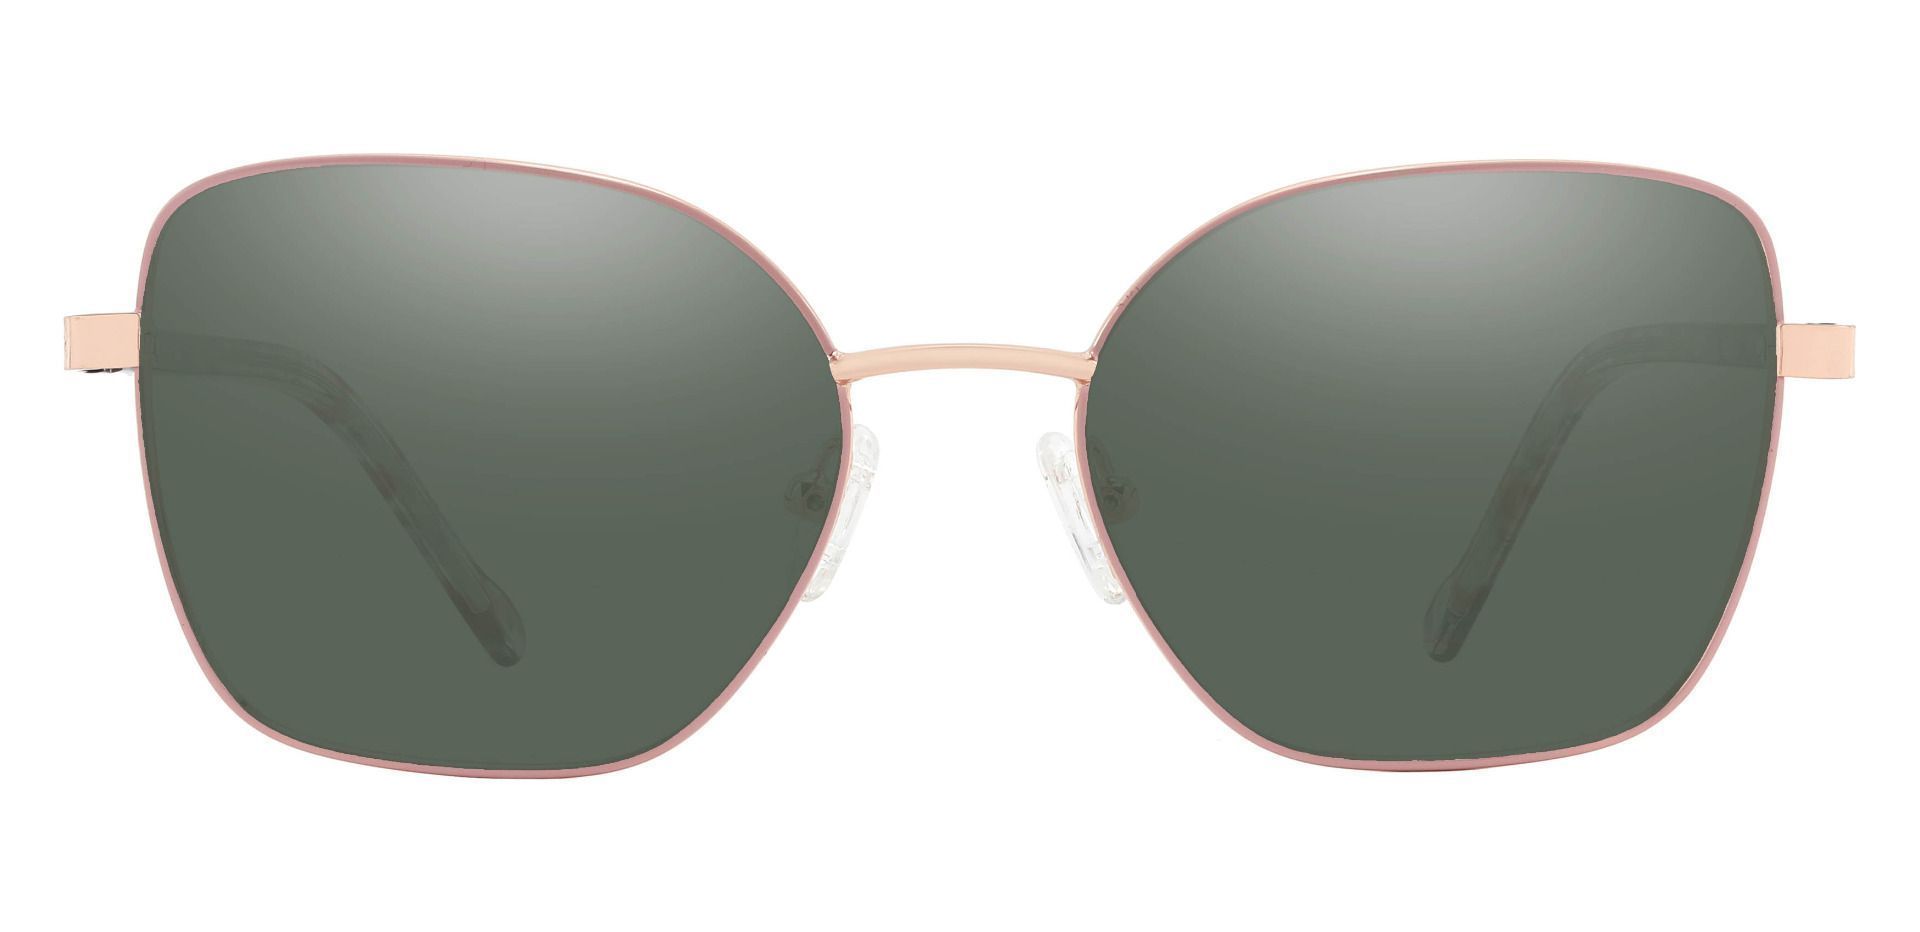 Hooper Geometric Progressive Sunglasses - Pink Frame With Green Lenses